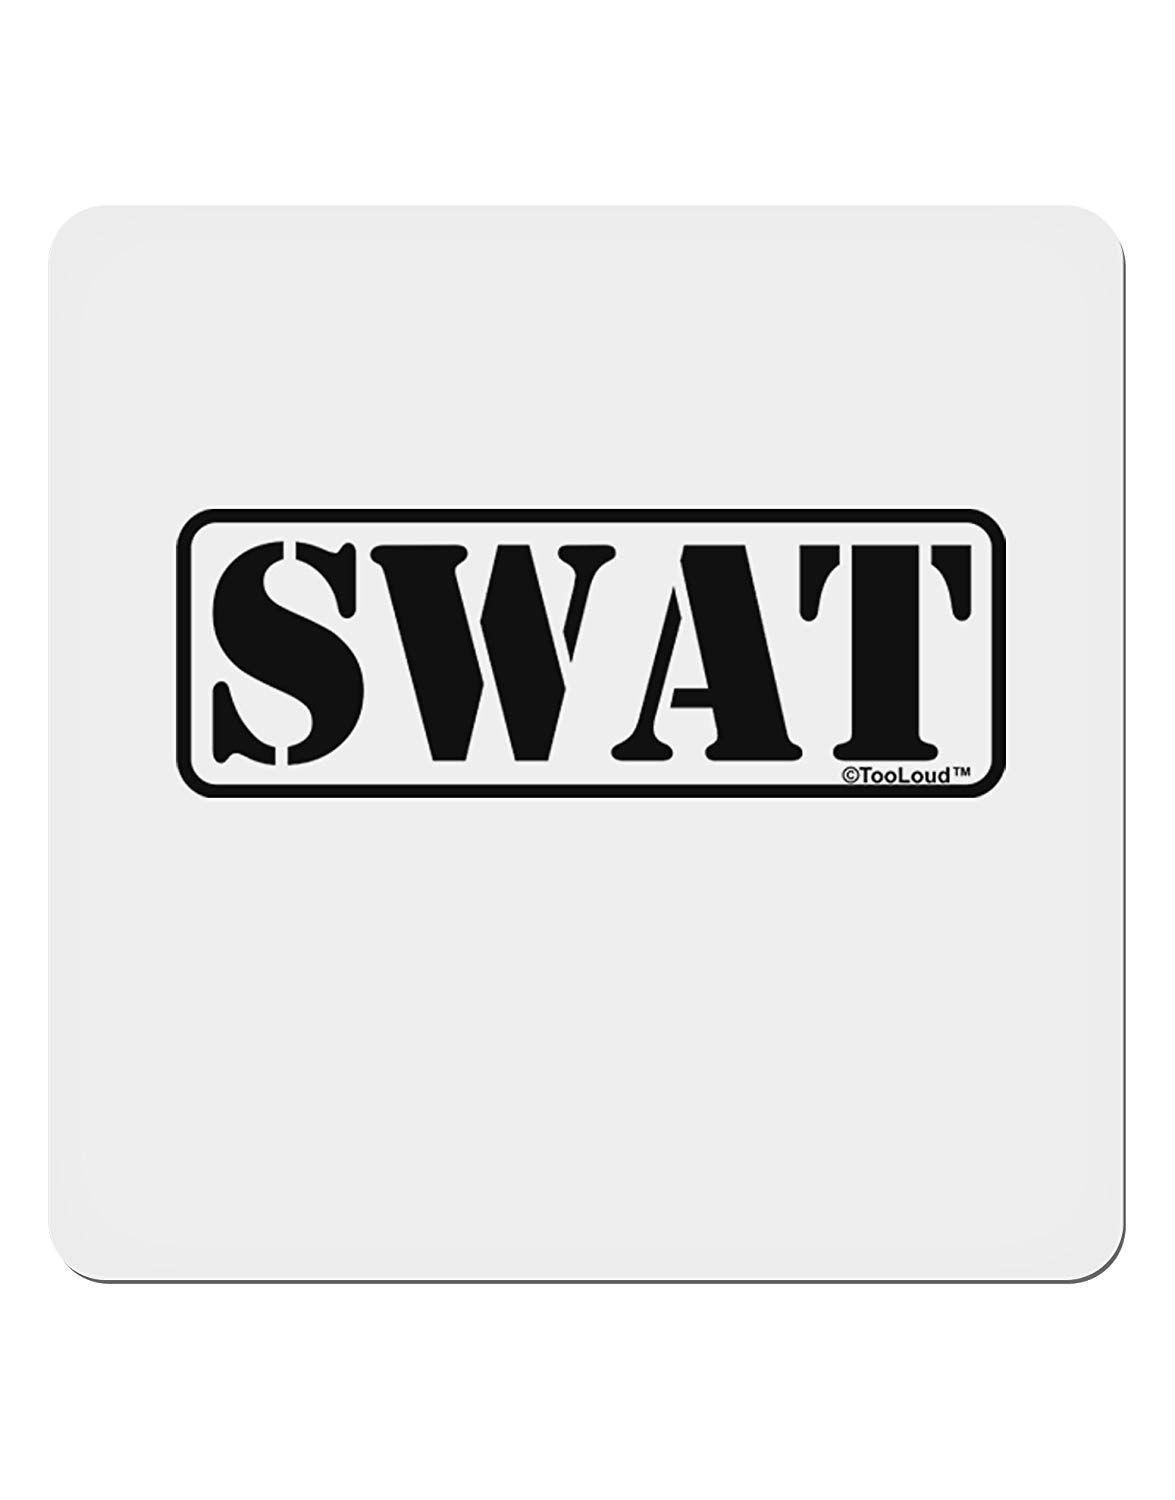 Swat Logo - Amazon.com: TooLoud SWAT Team Logo - Text #2 4x4 Square Sticker - 4 ...